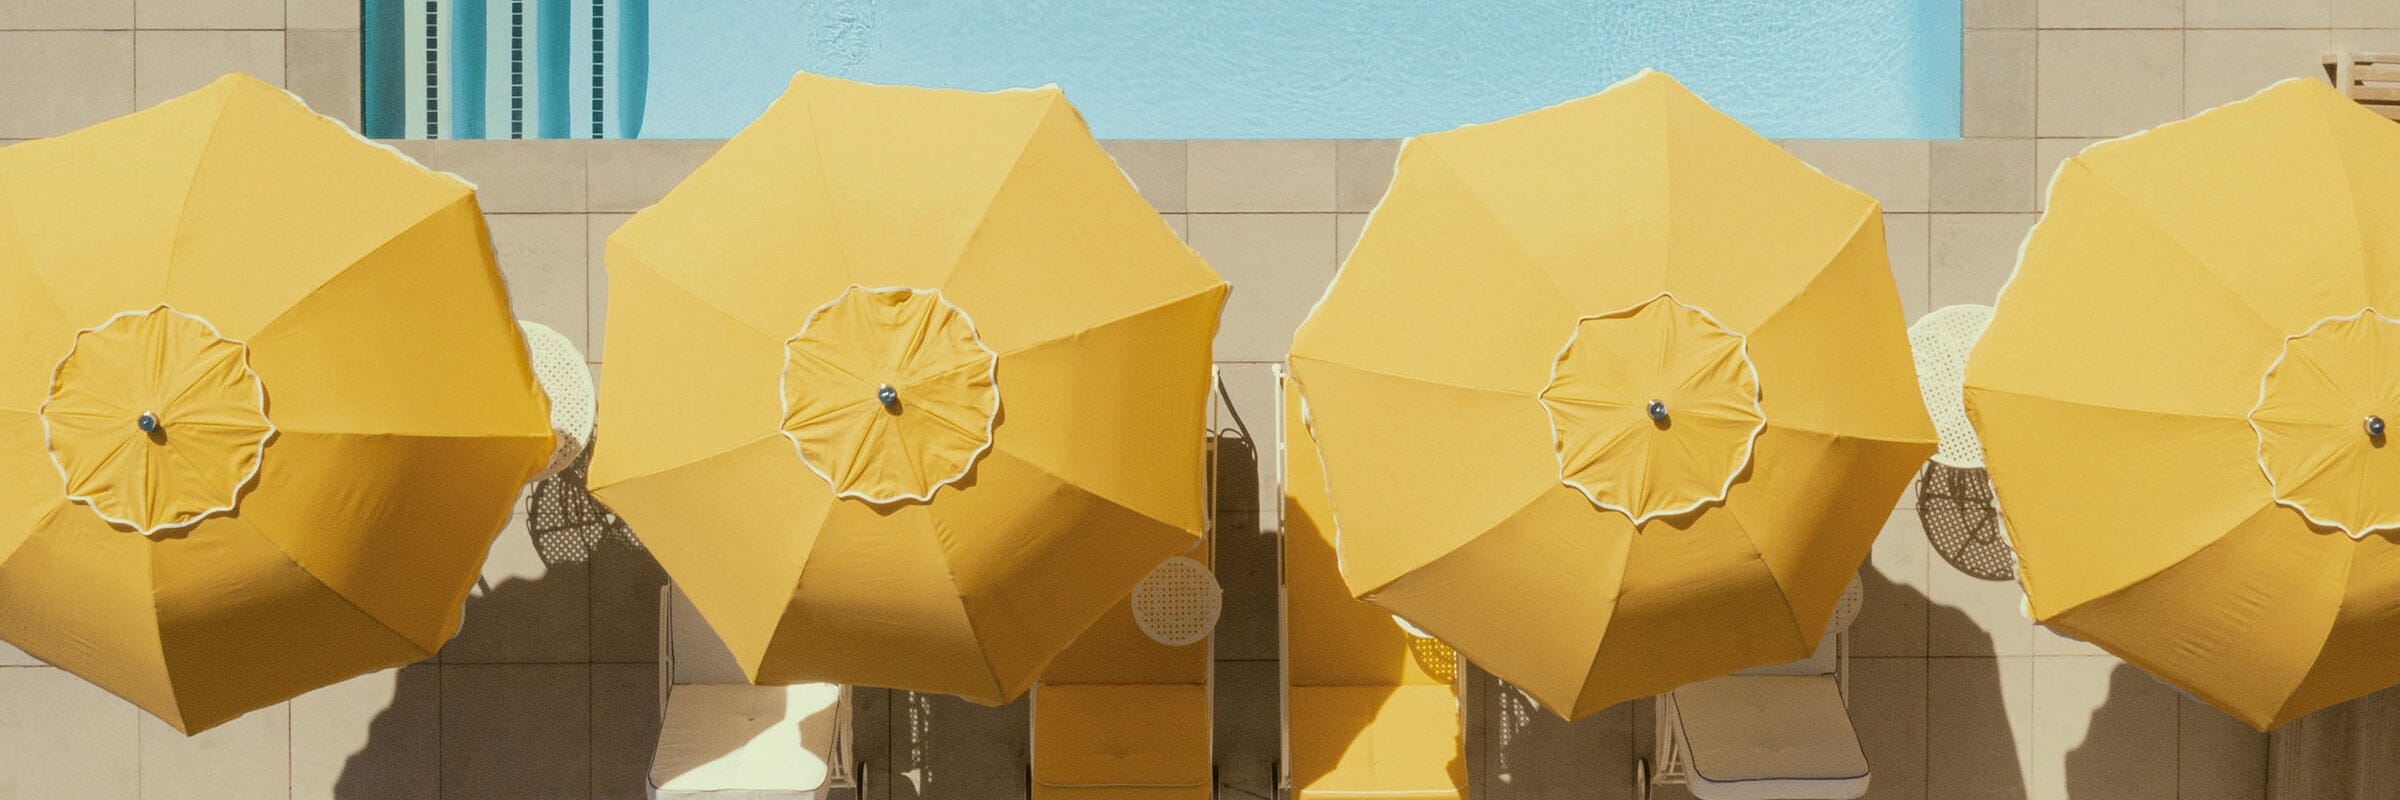 yellow patio umbrella tops poolside